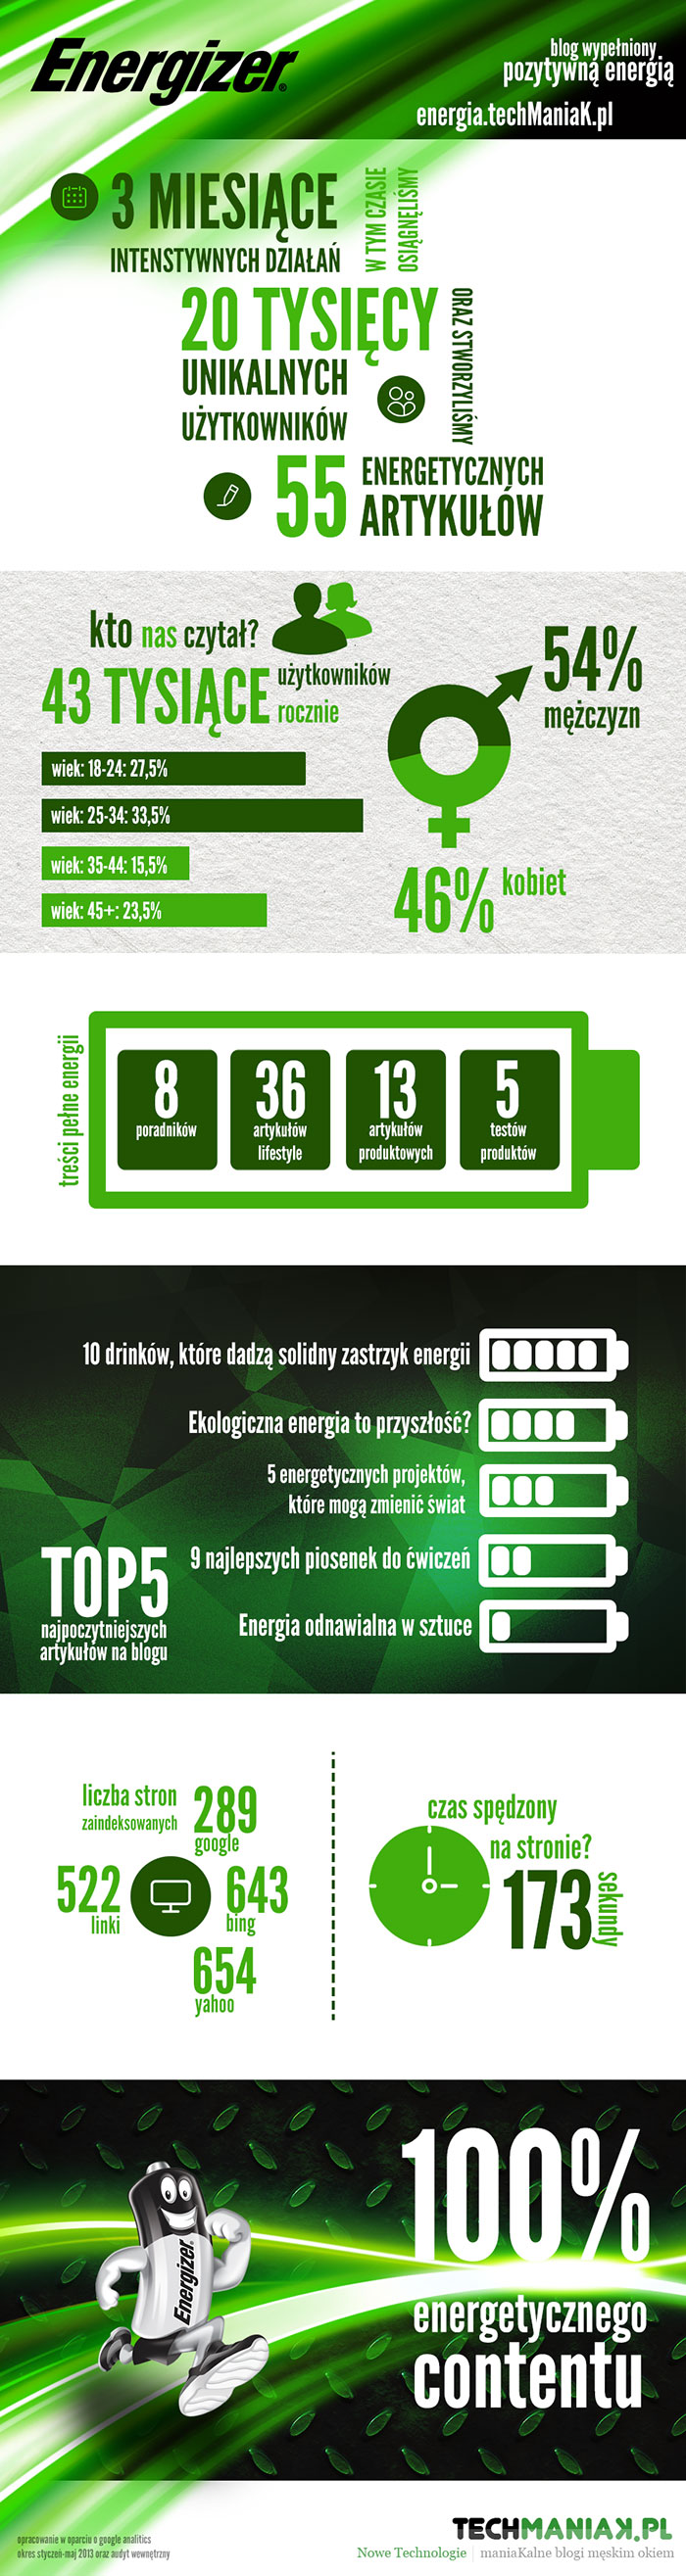 blog Energizer od techManiaK.pl